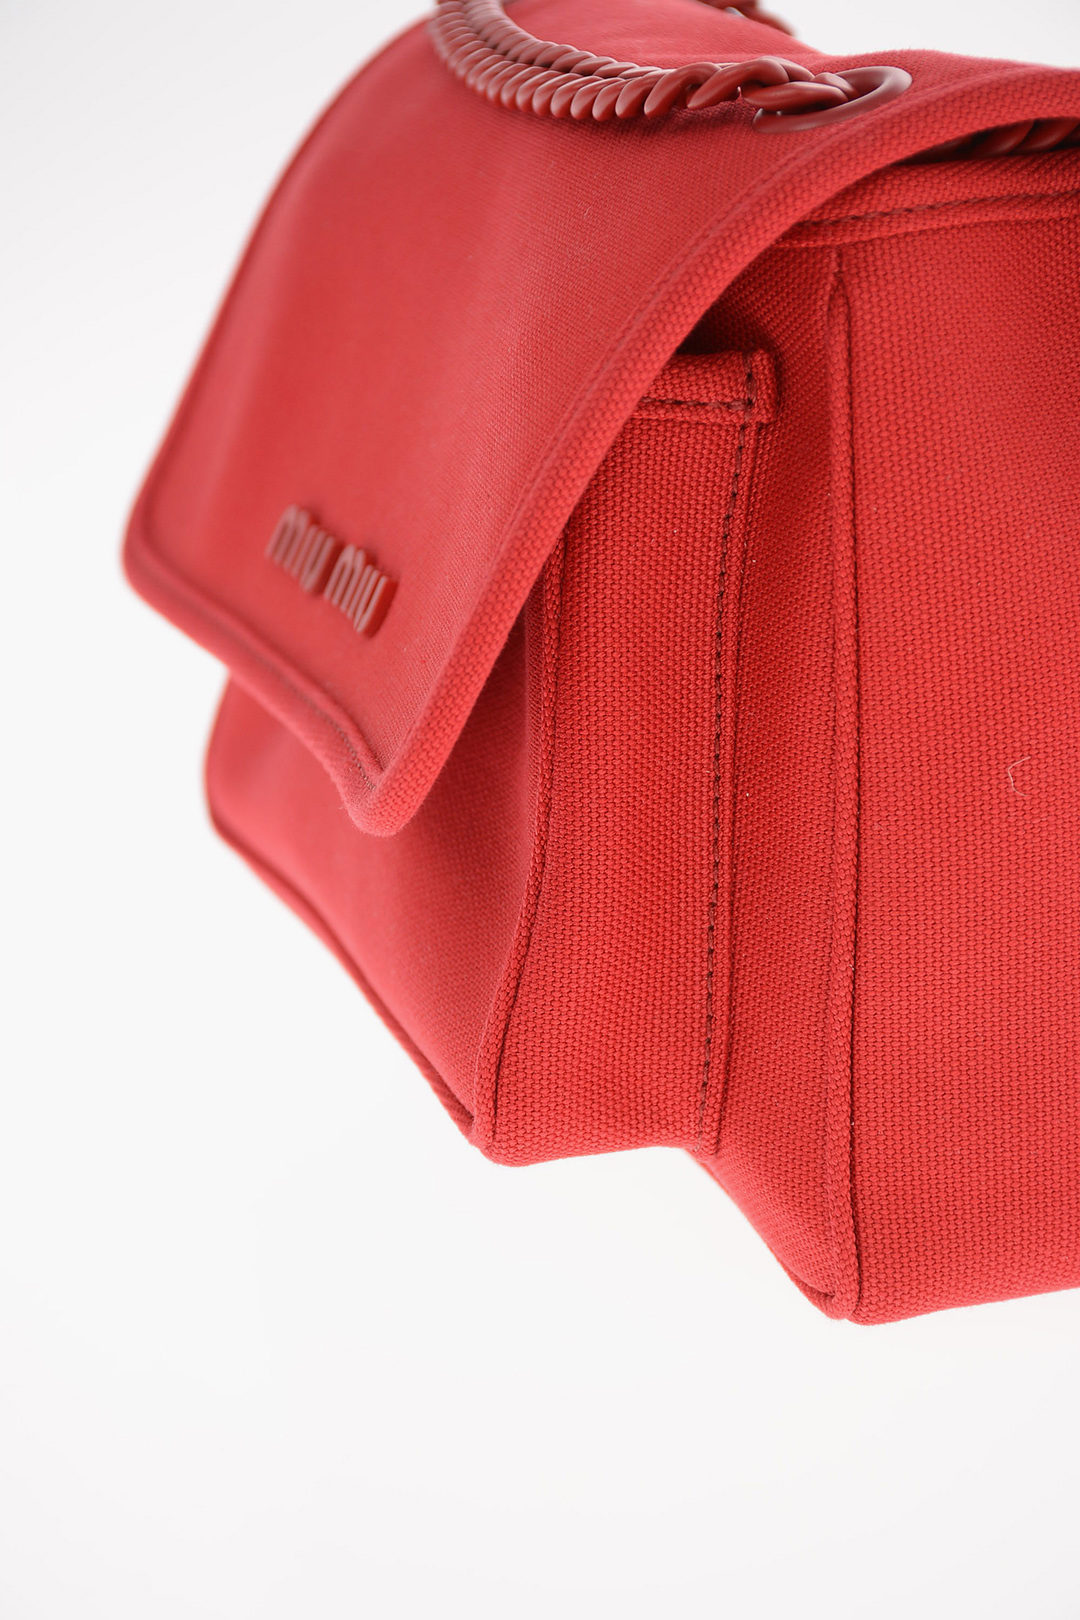 Miu Miu M.M. Paris Collaboration Shoulder Bag Red 22cm x 15cm x 6cm マチ :  約6cm